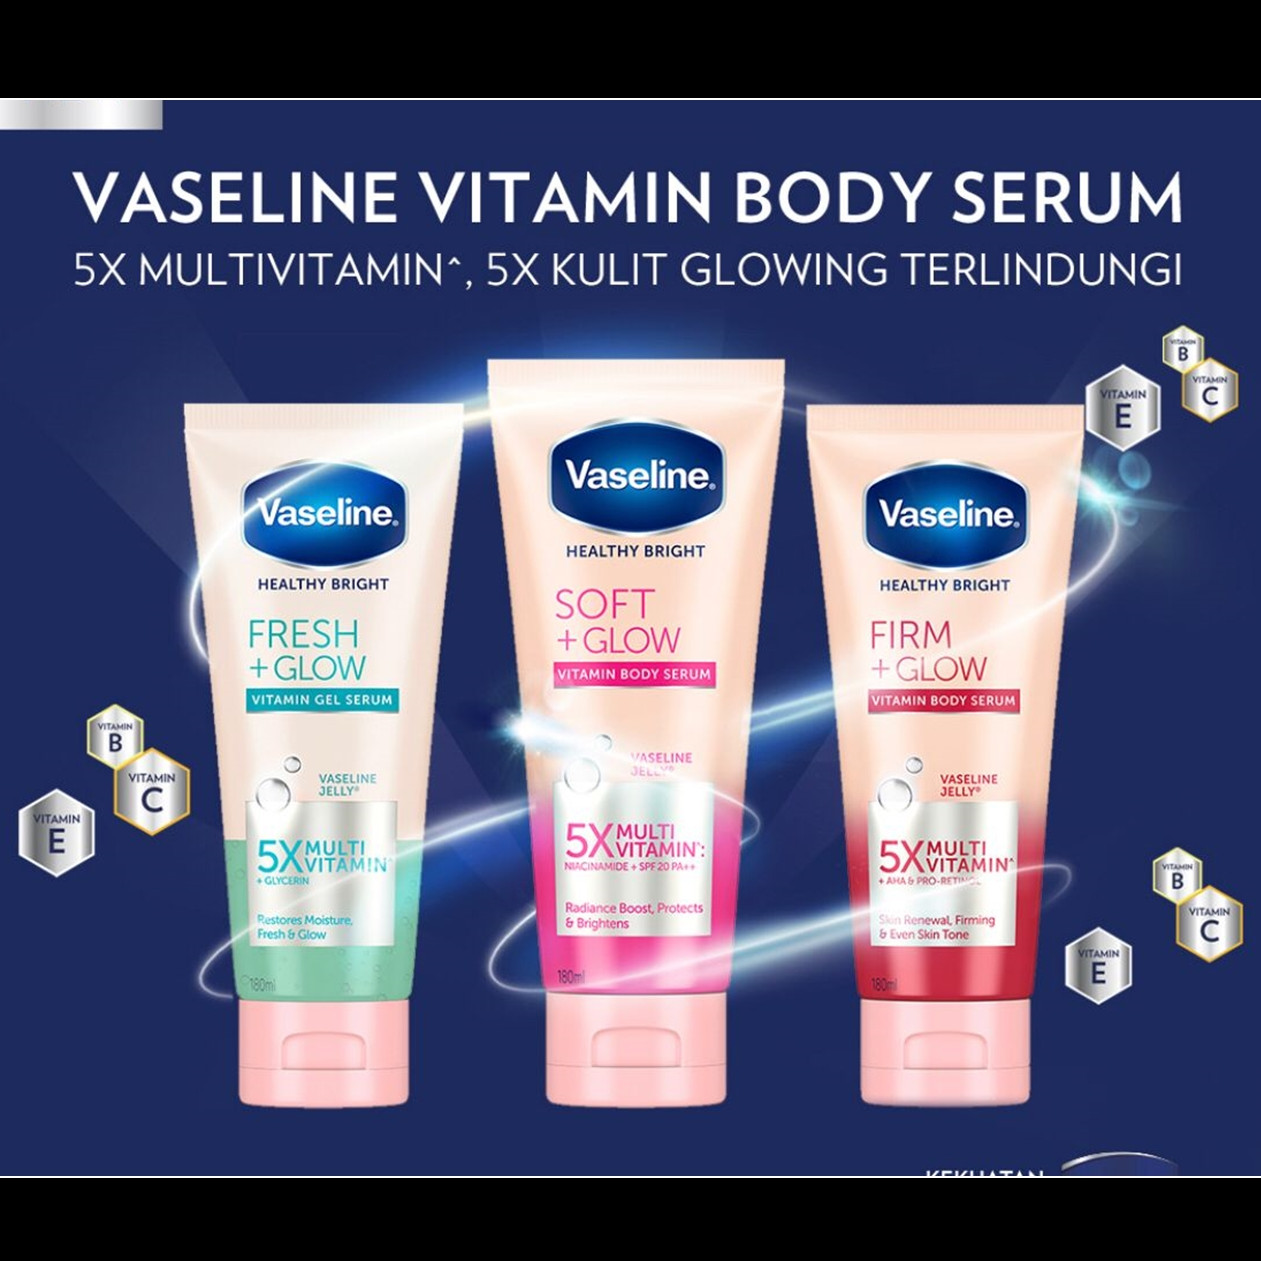 6 Manfaat Vaseline Body Serum, bantu cerahkan kulit